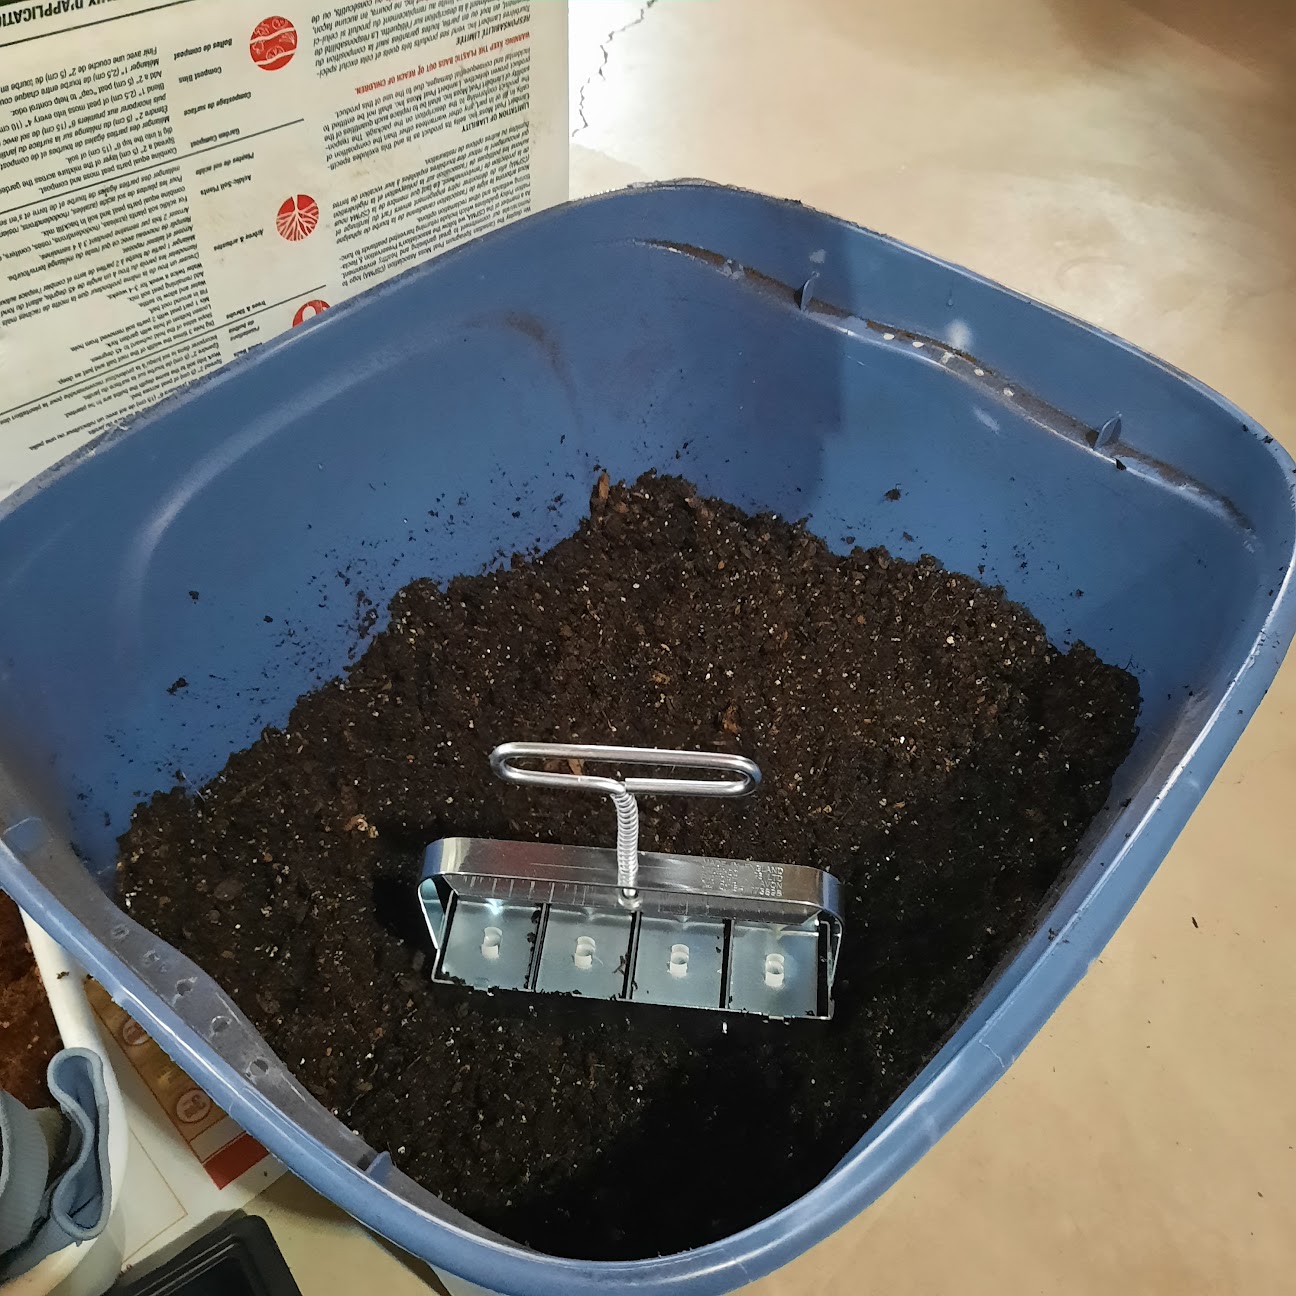 Soil blocker tool in a tub filled with blocker soil mix